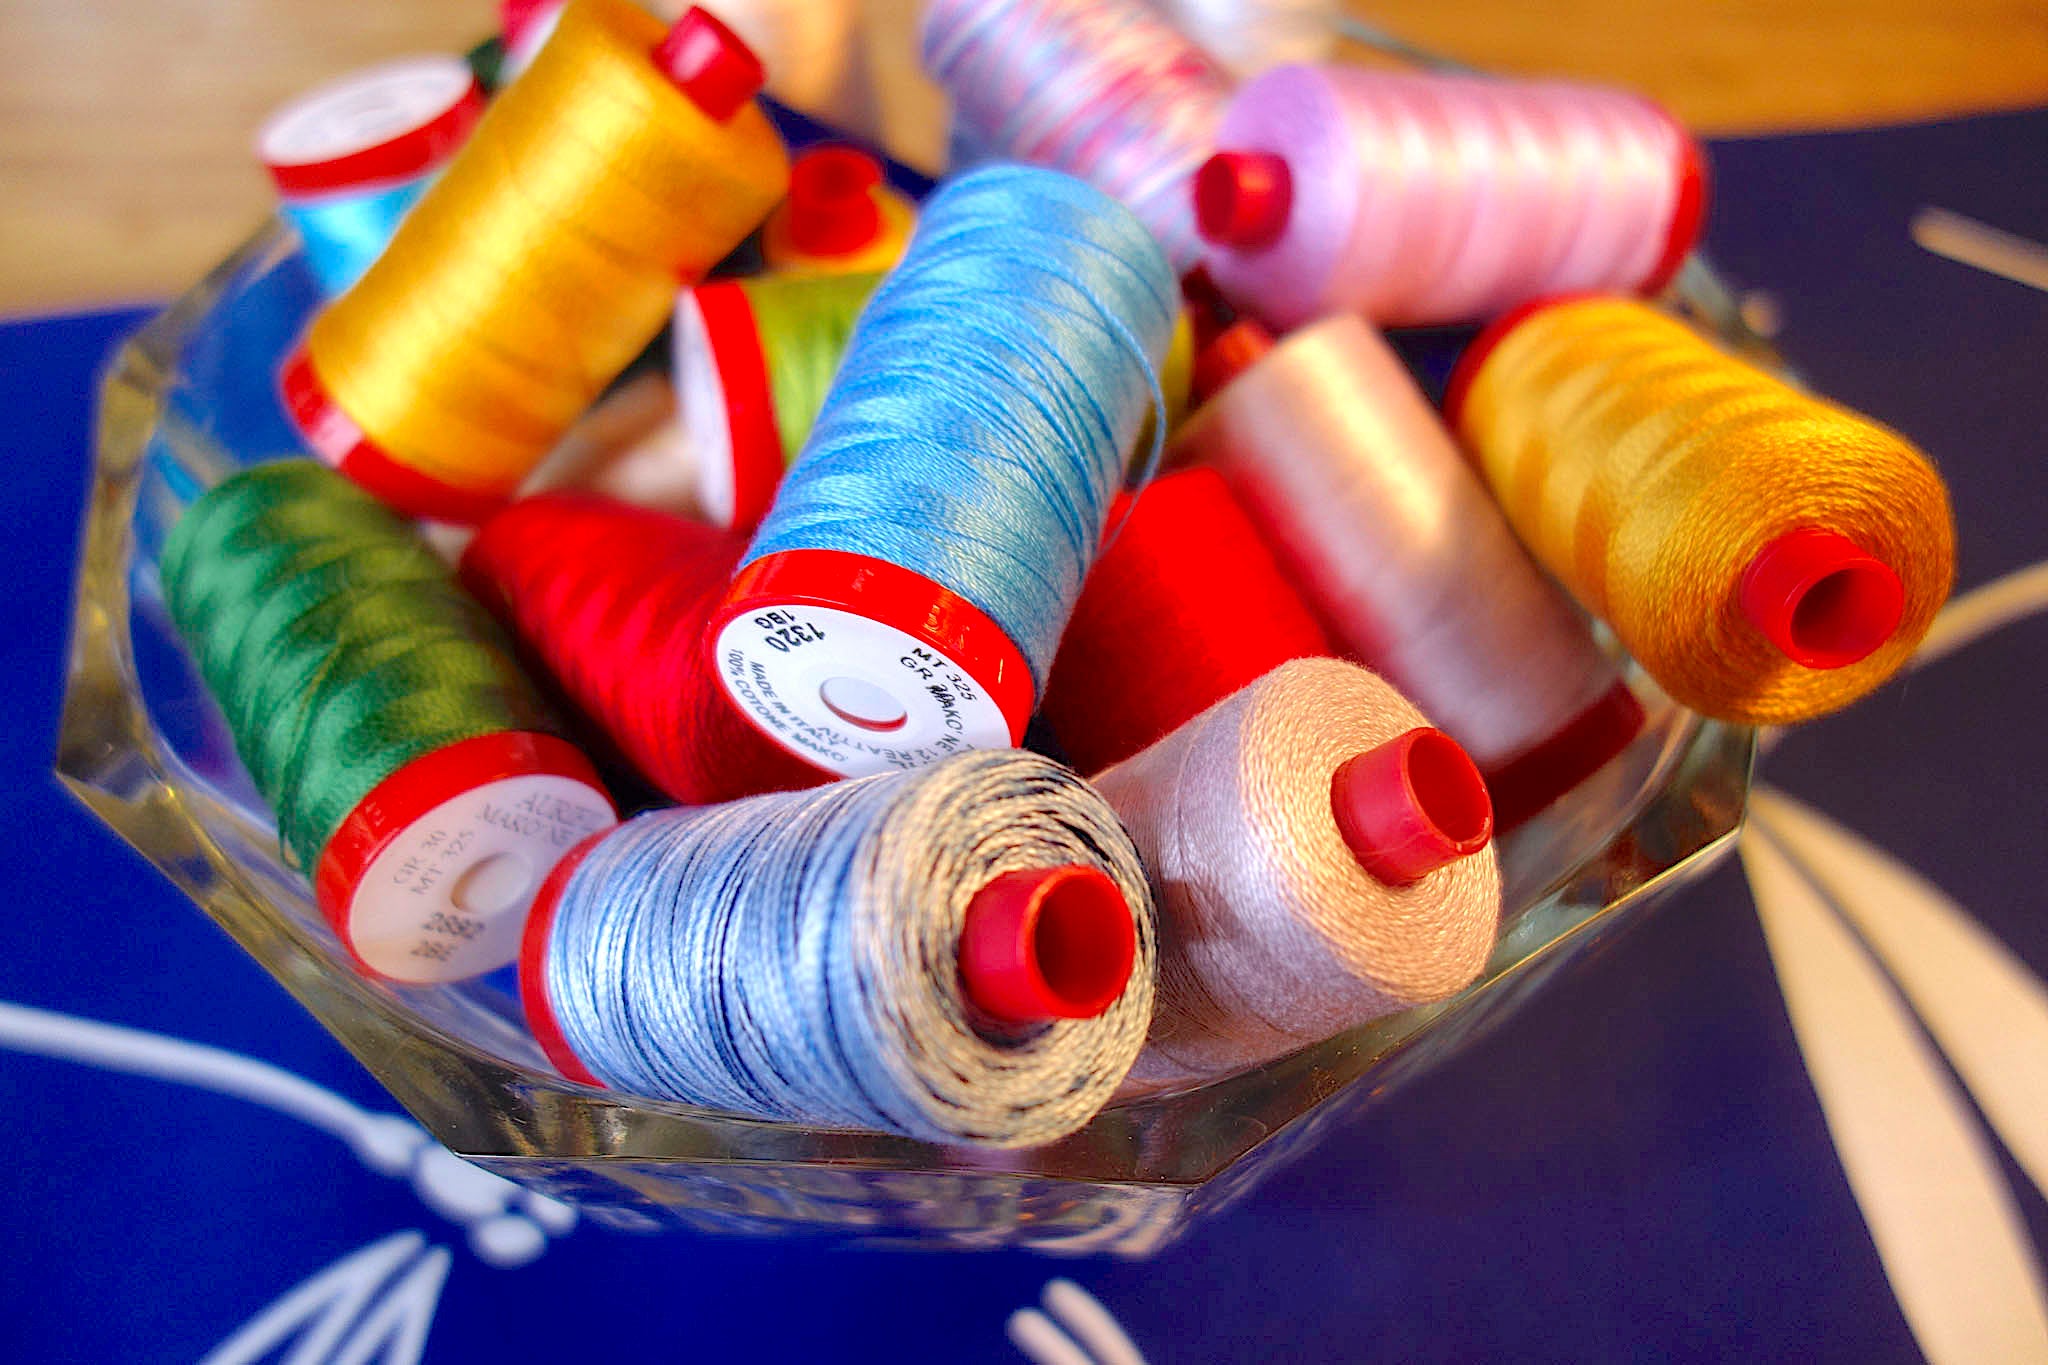 Aurifil 12wt cotton thread used in the Baby Lock Sashiko 2 sewing machine to create a Big Stitch look